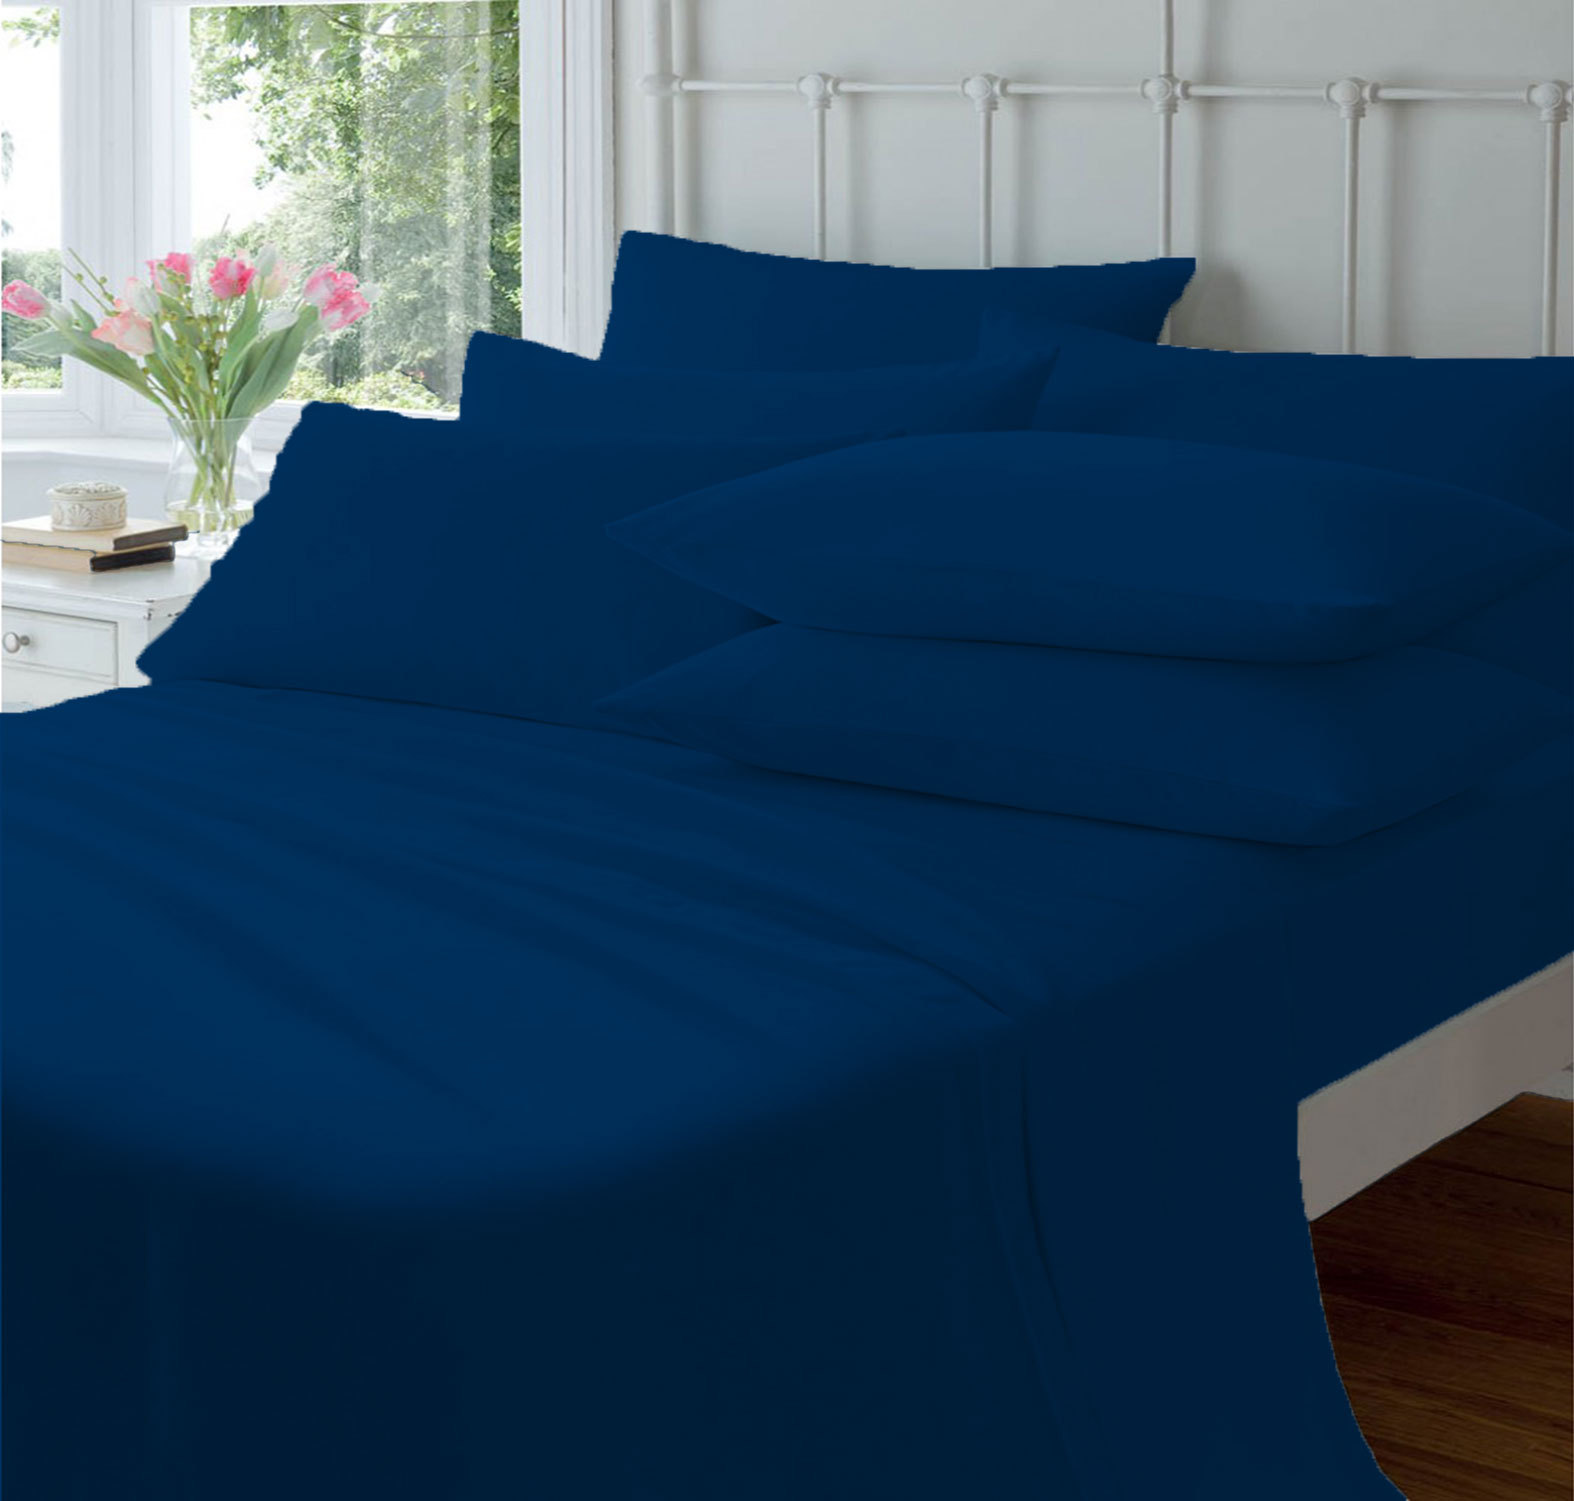 15 " Pocket Blue Sheet Set Egyptian Cotton Bedding 600 TC choose Size - $74.99